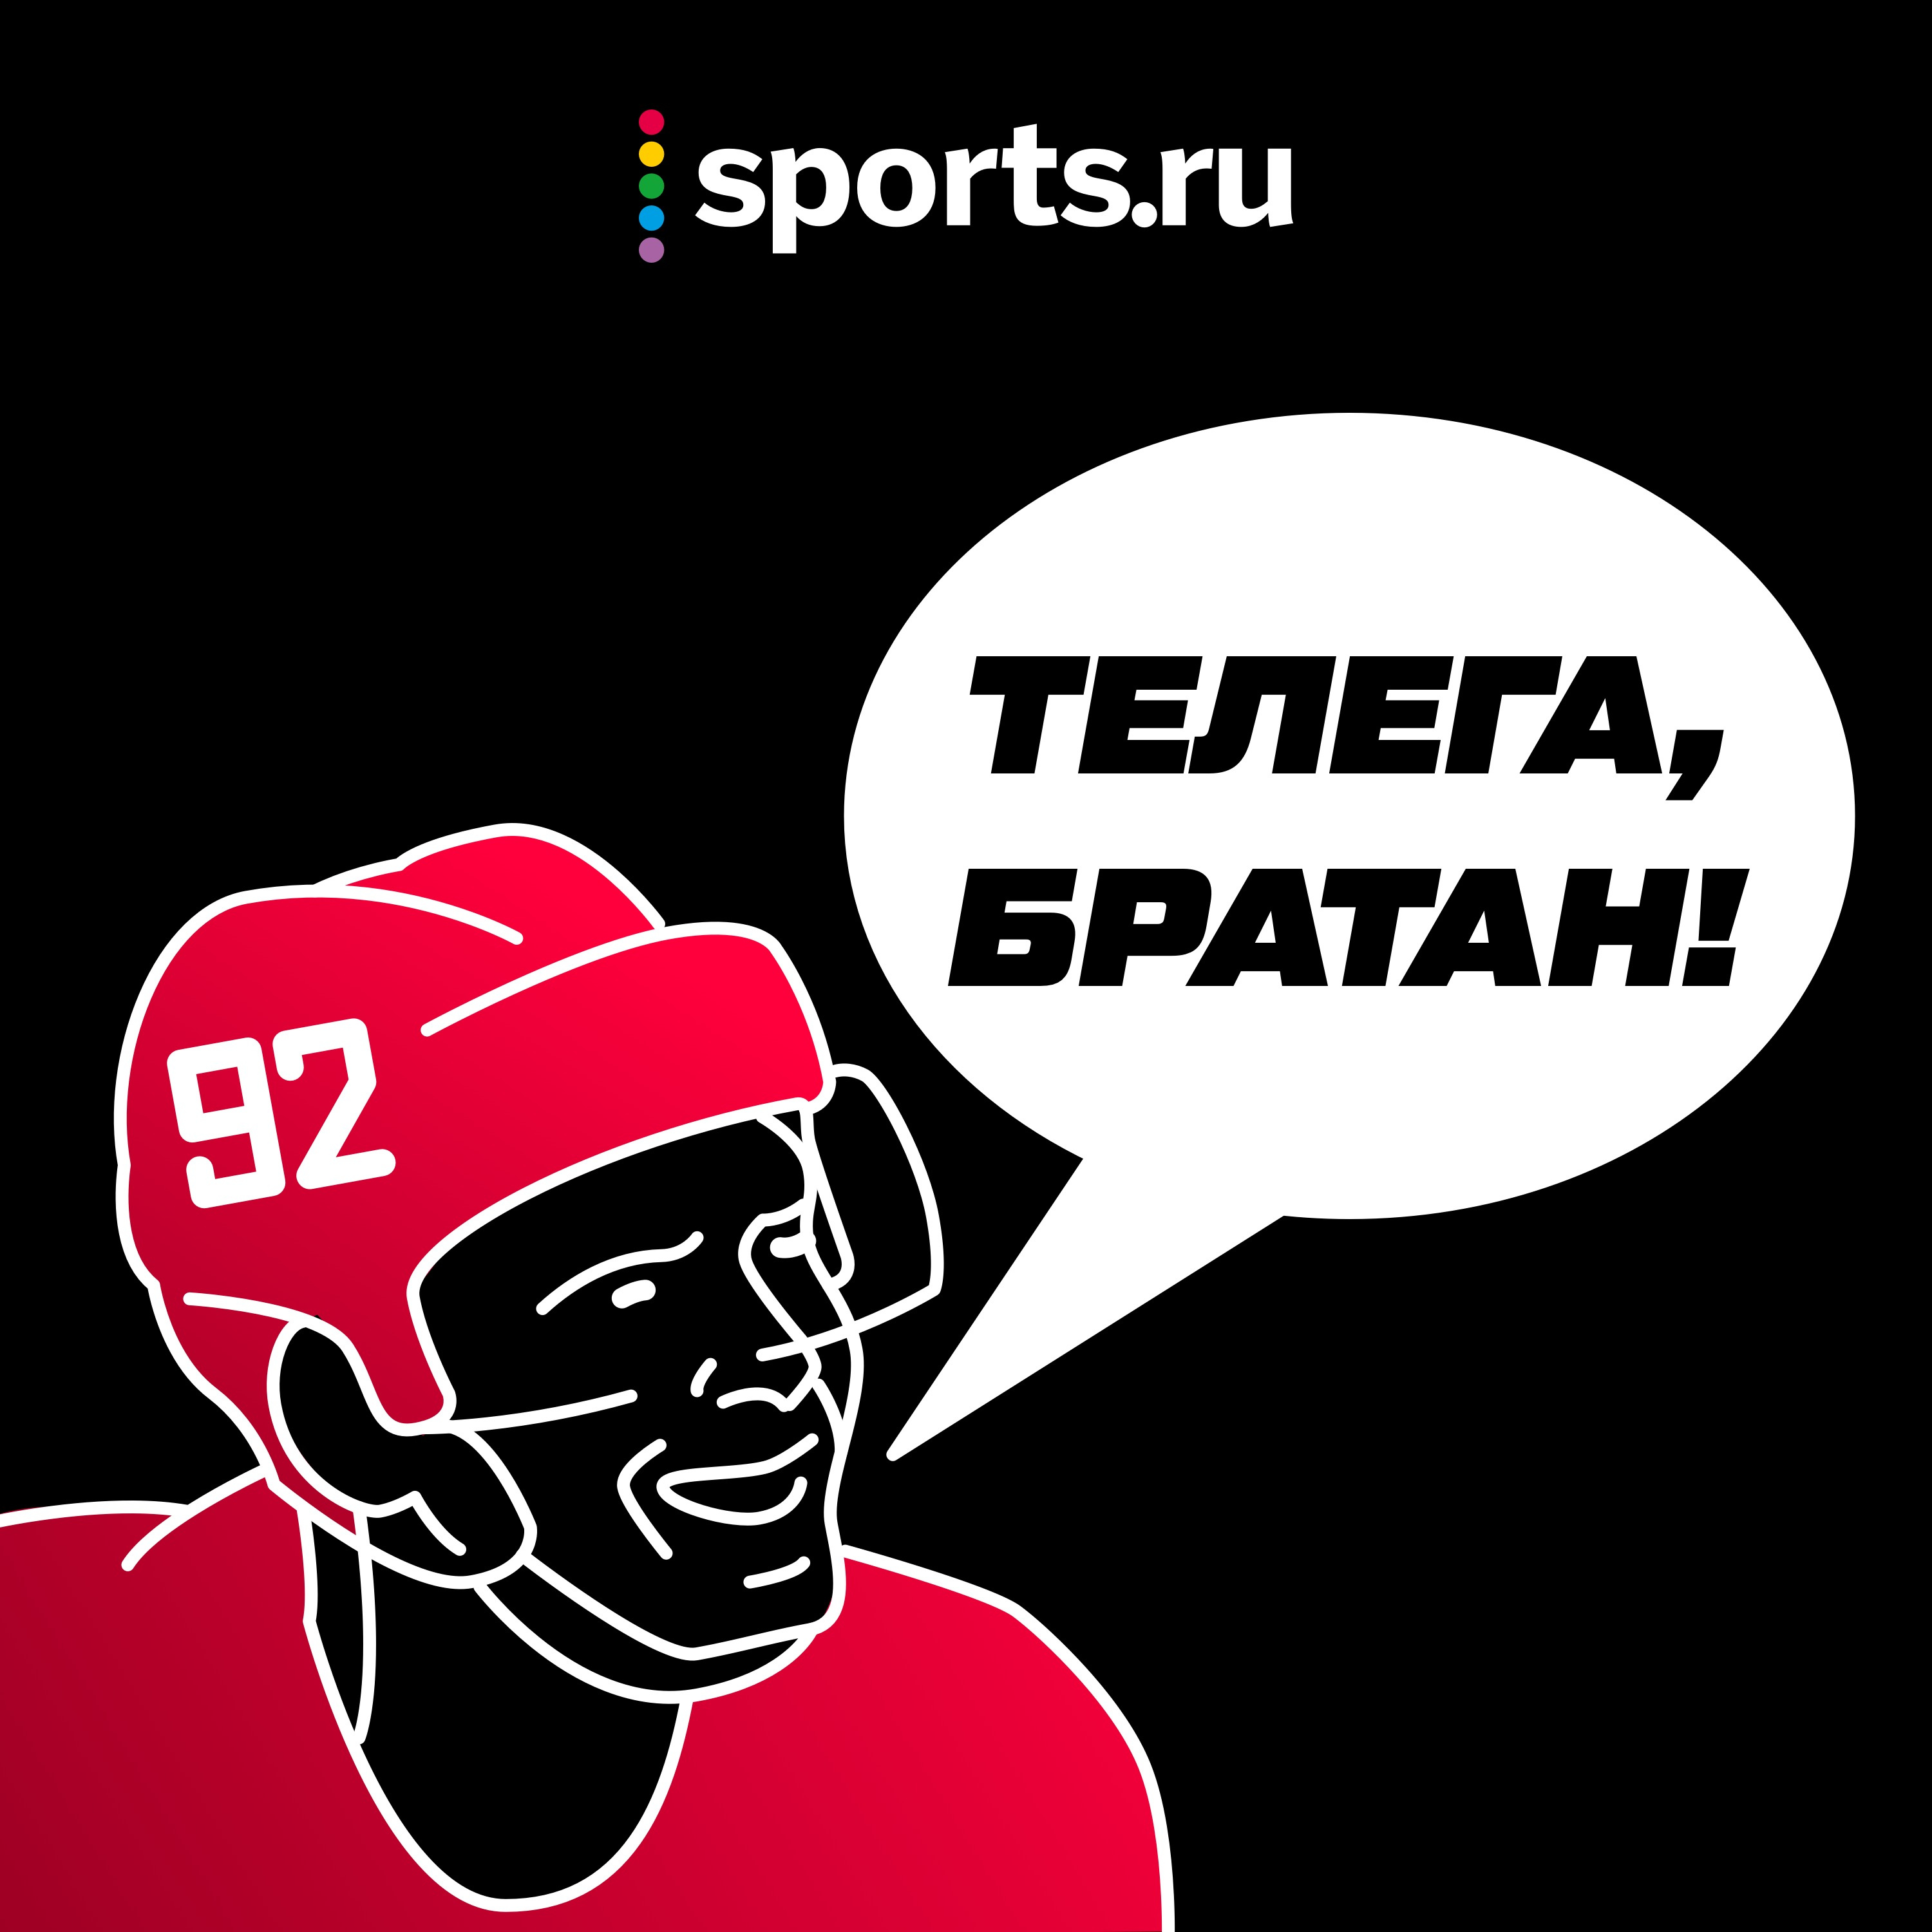 Телега, братан!:Sports.ru